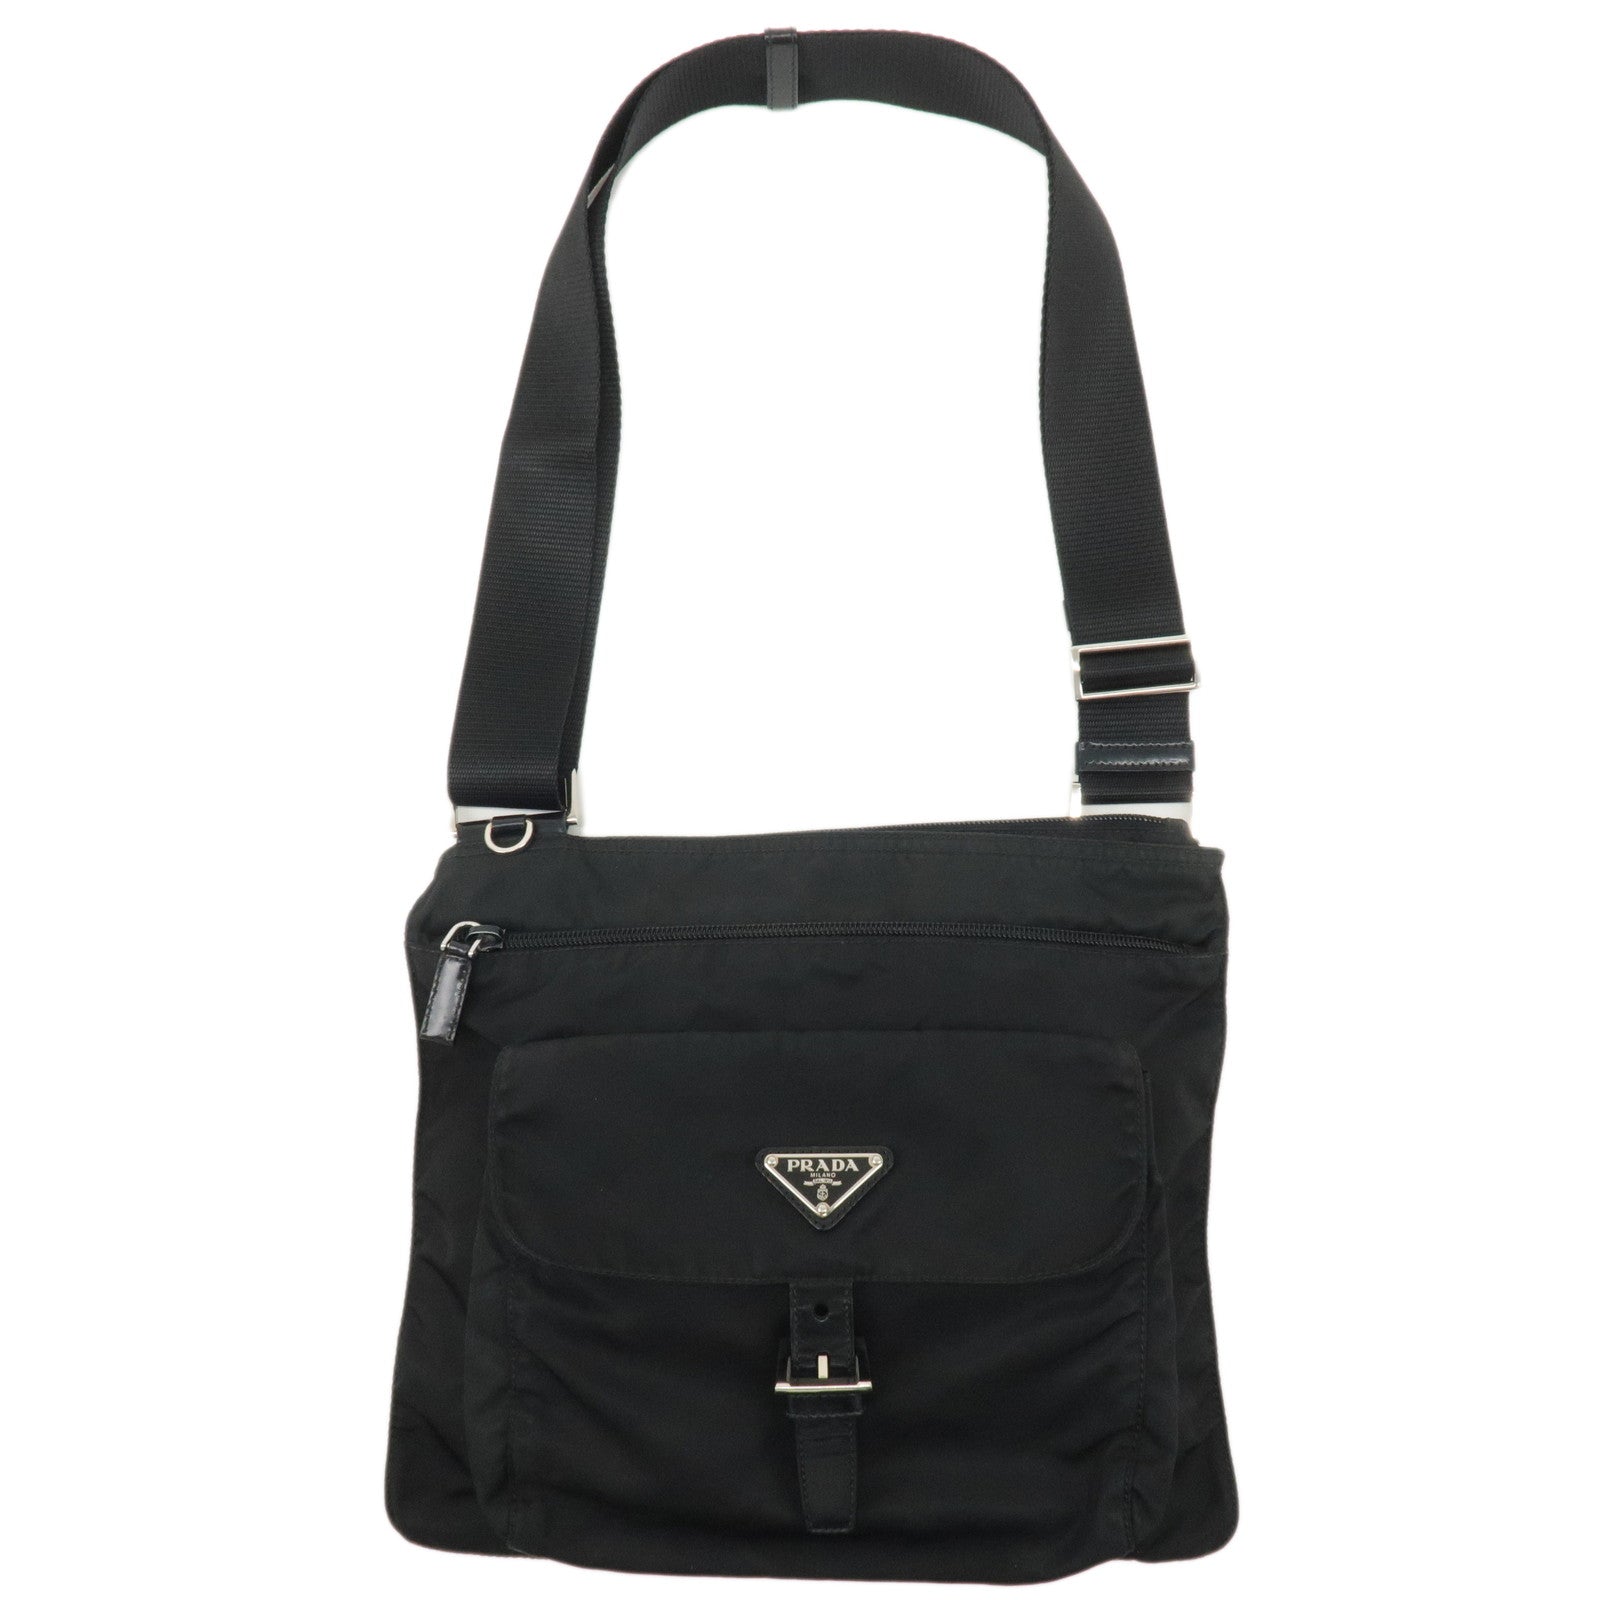 PRADA-Logo-Nylon-Leather-Shoulder-Bag-Crossbody-Bag-Black